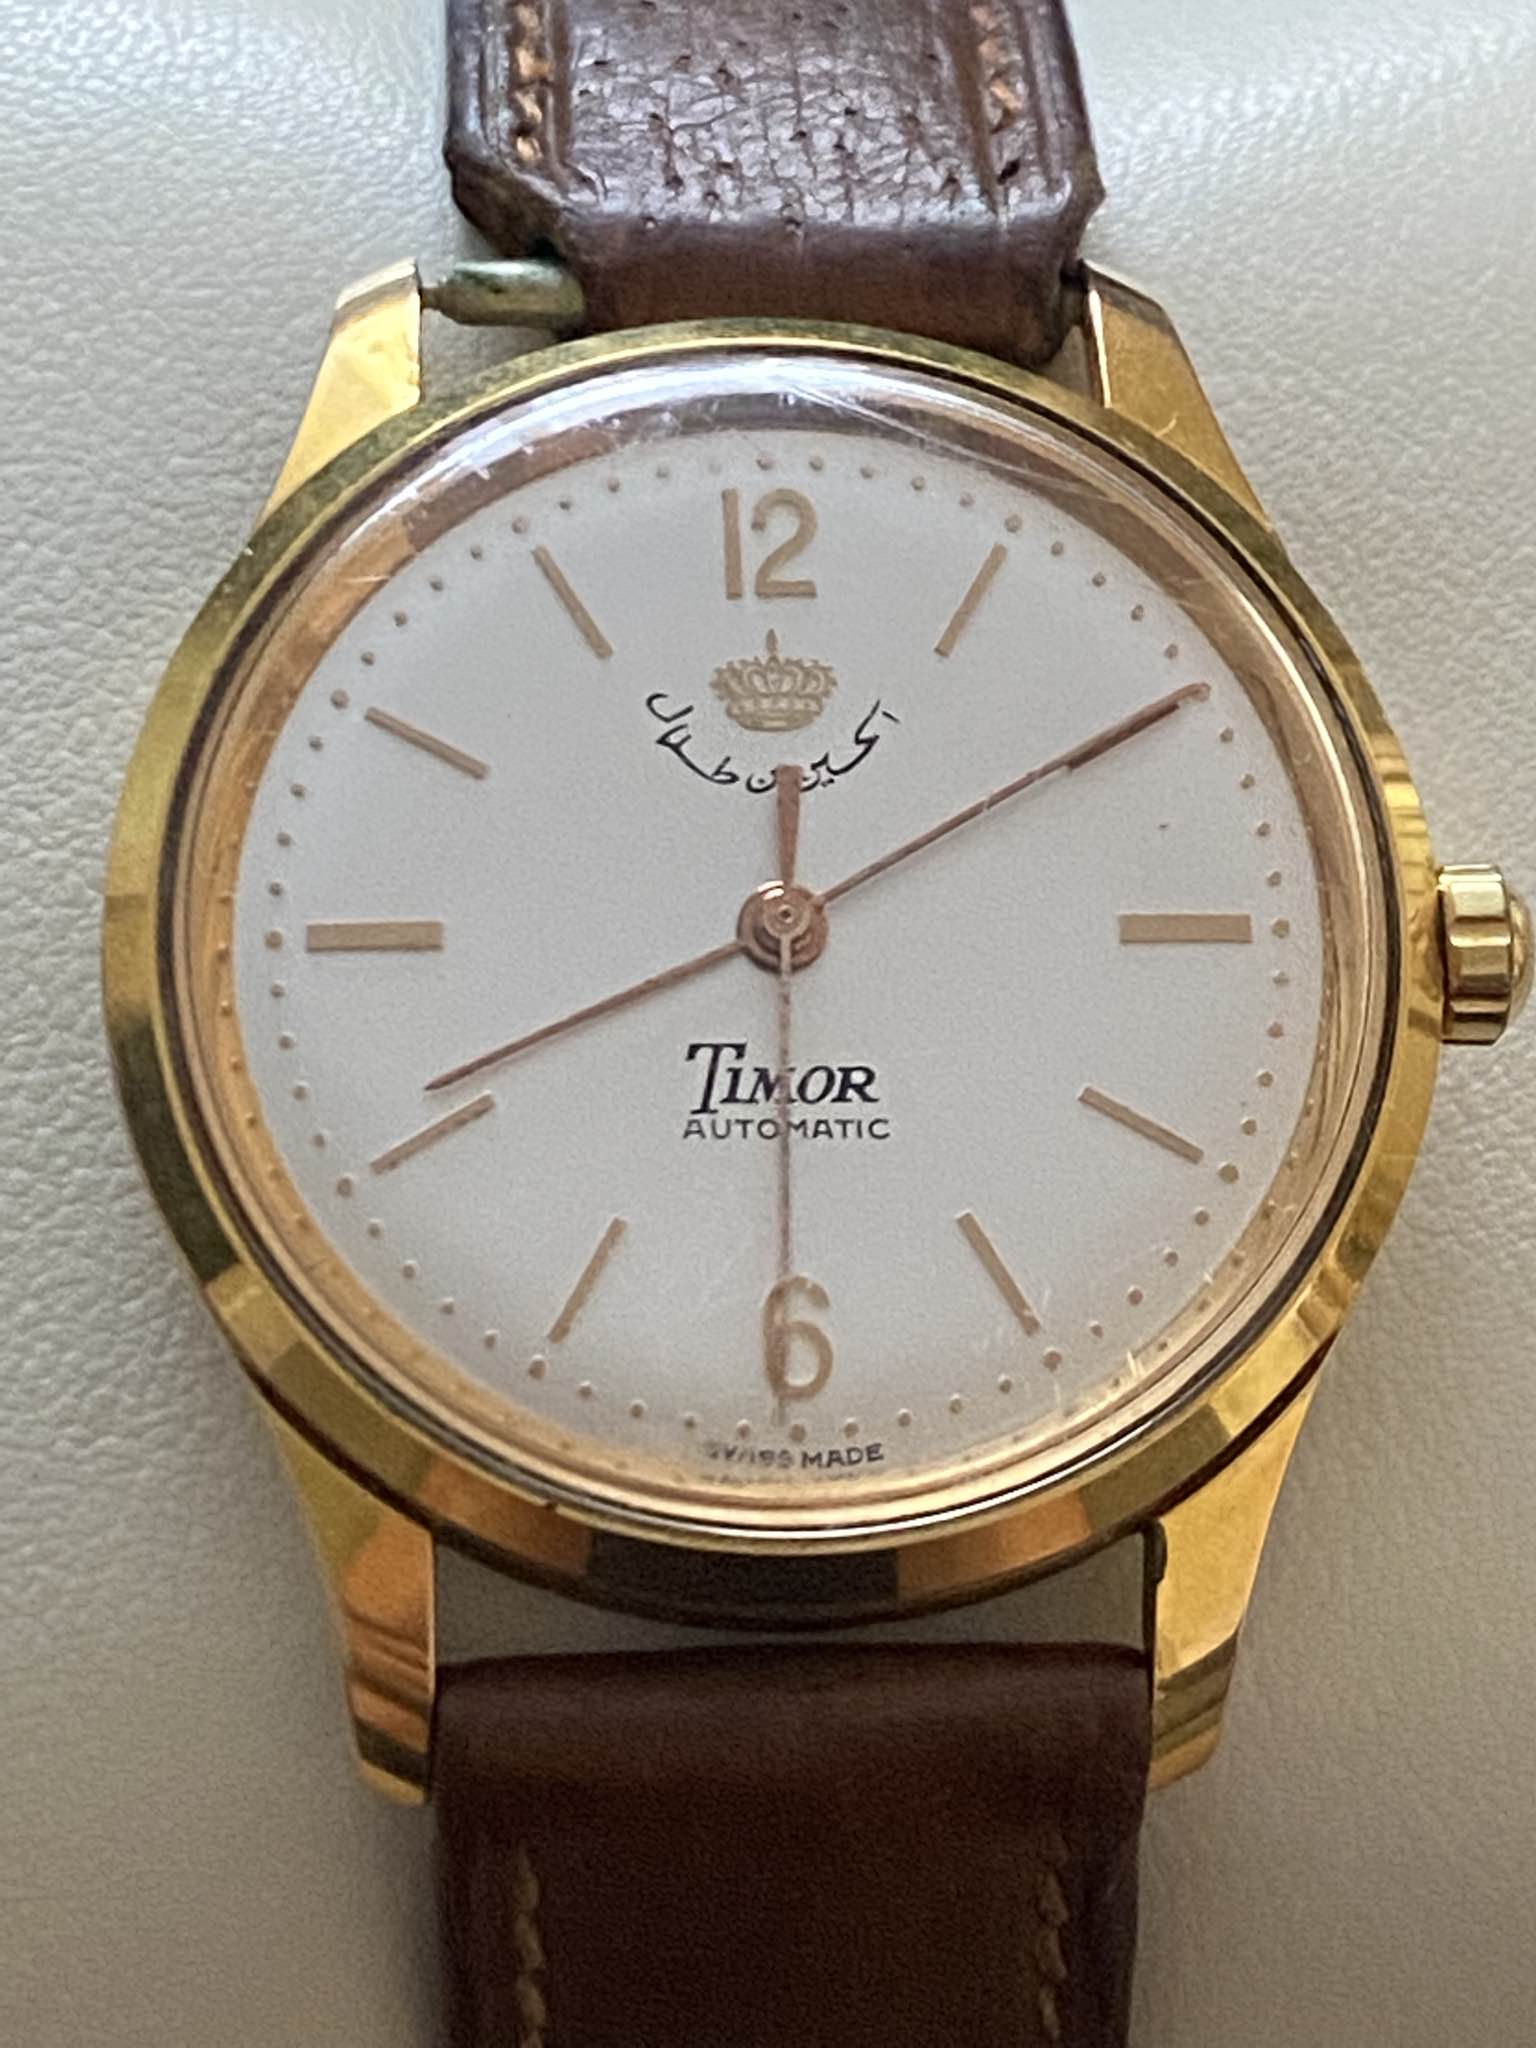 Vintage Timor Automatic Men’s Swiss Watch Special Edition King Hussein of Jordan ساعة تيمور اتوماتيك هدية من الملك حسين بن طلال